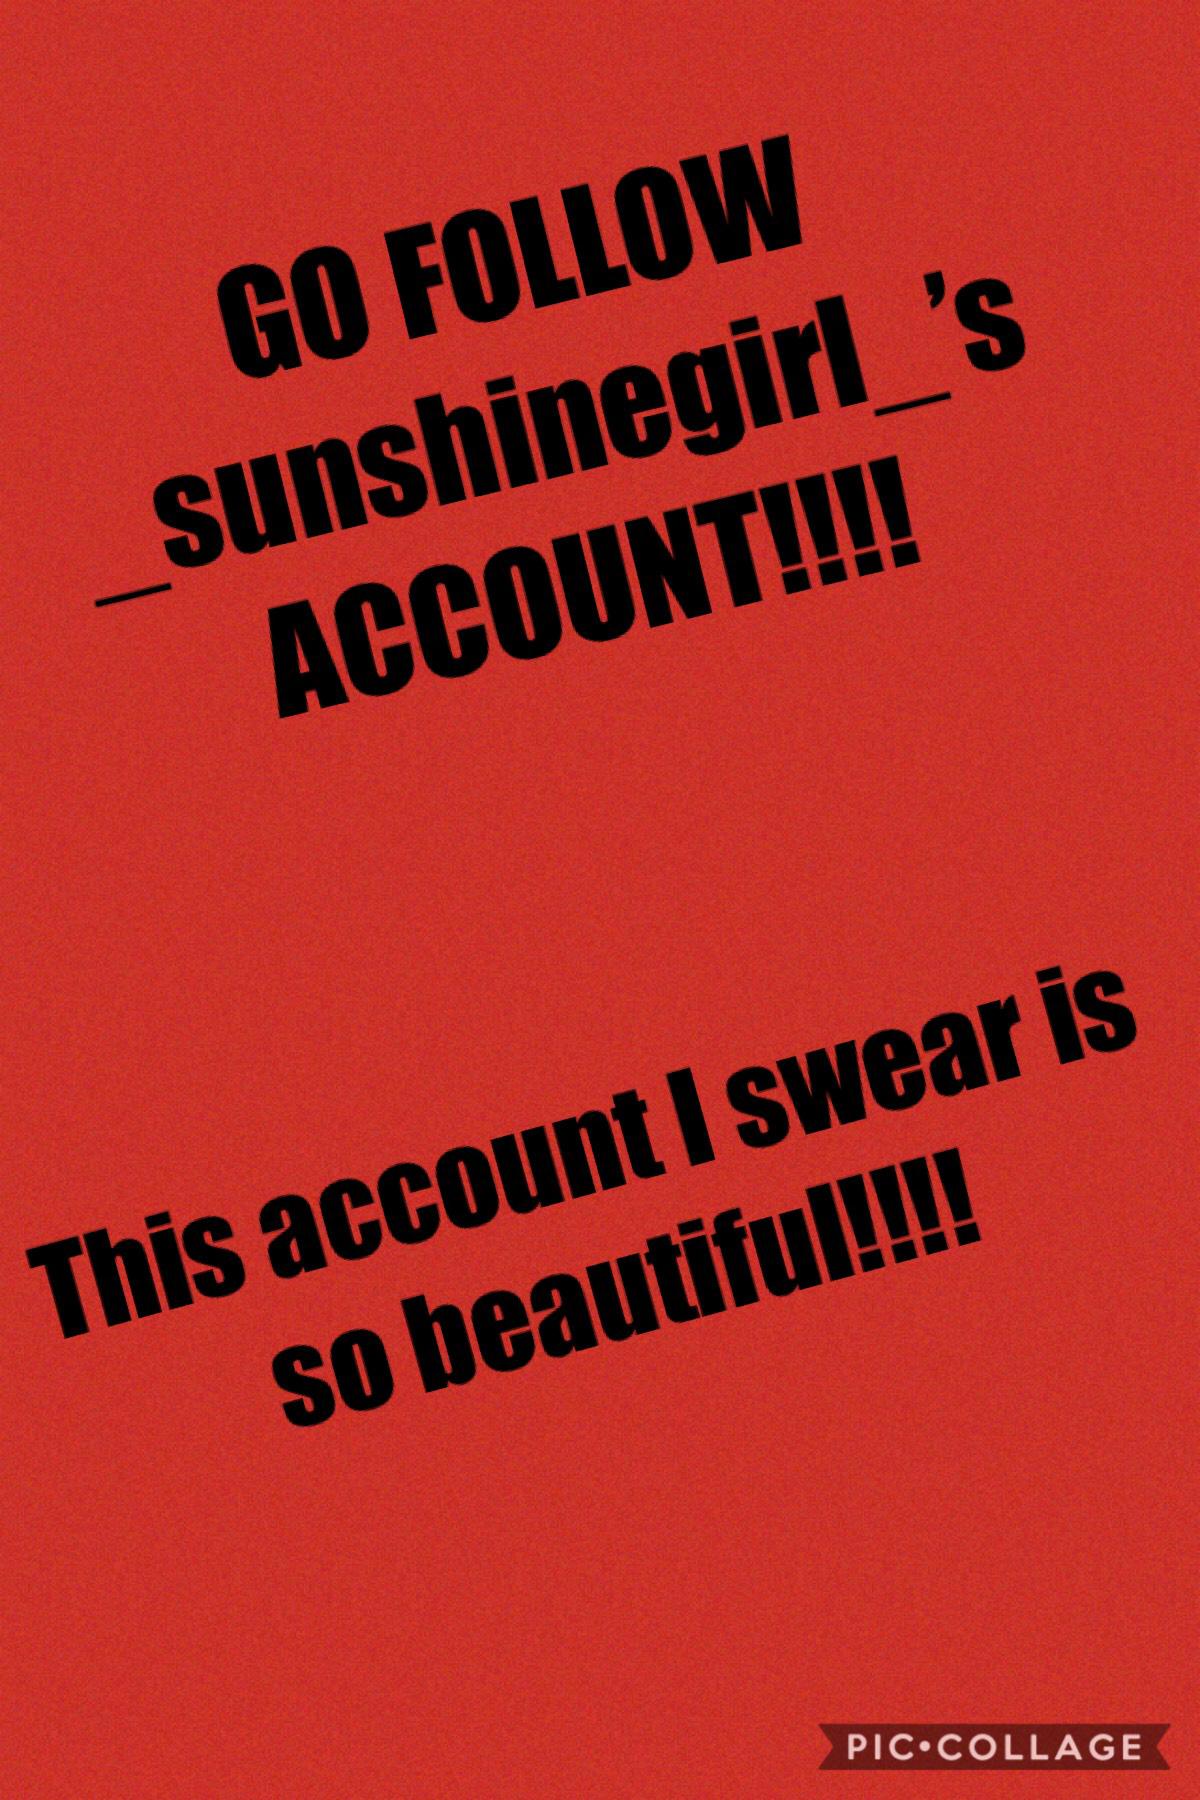 Go follow _sunshinegirl_’s account! 